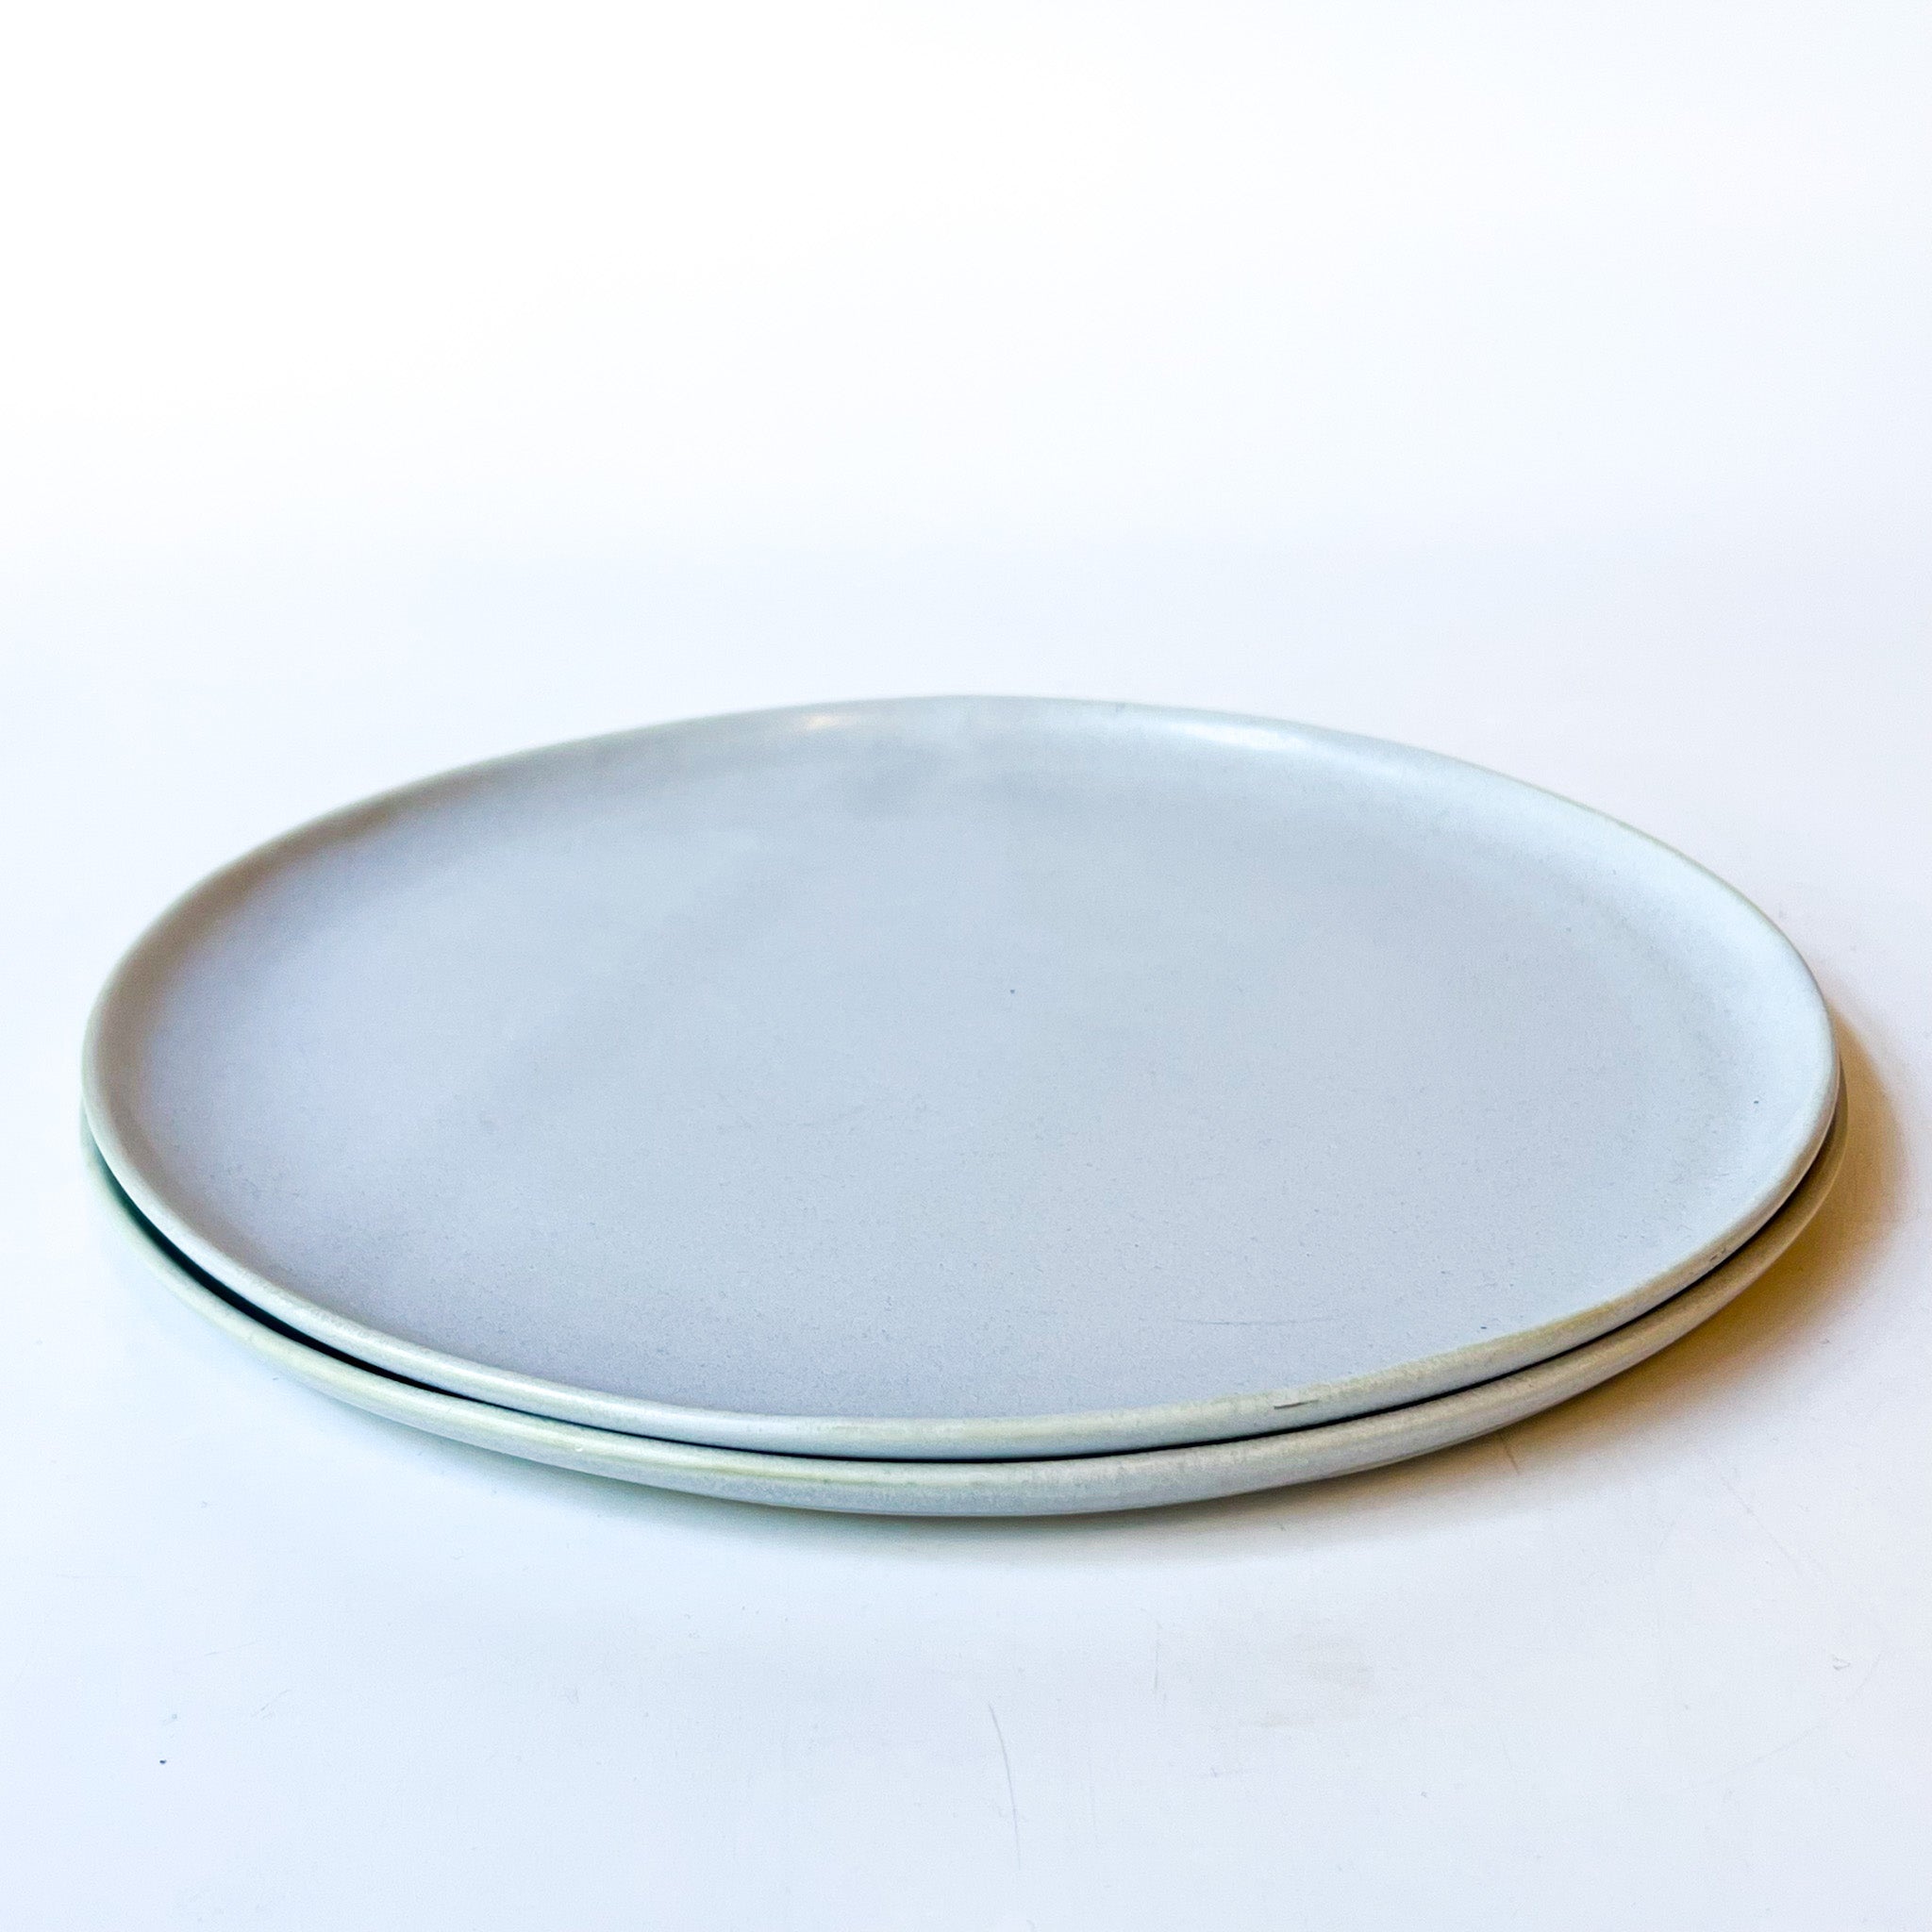 Favorite Dinner Plate - Solid Color